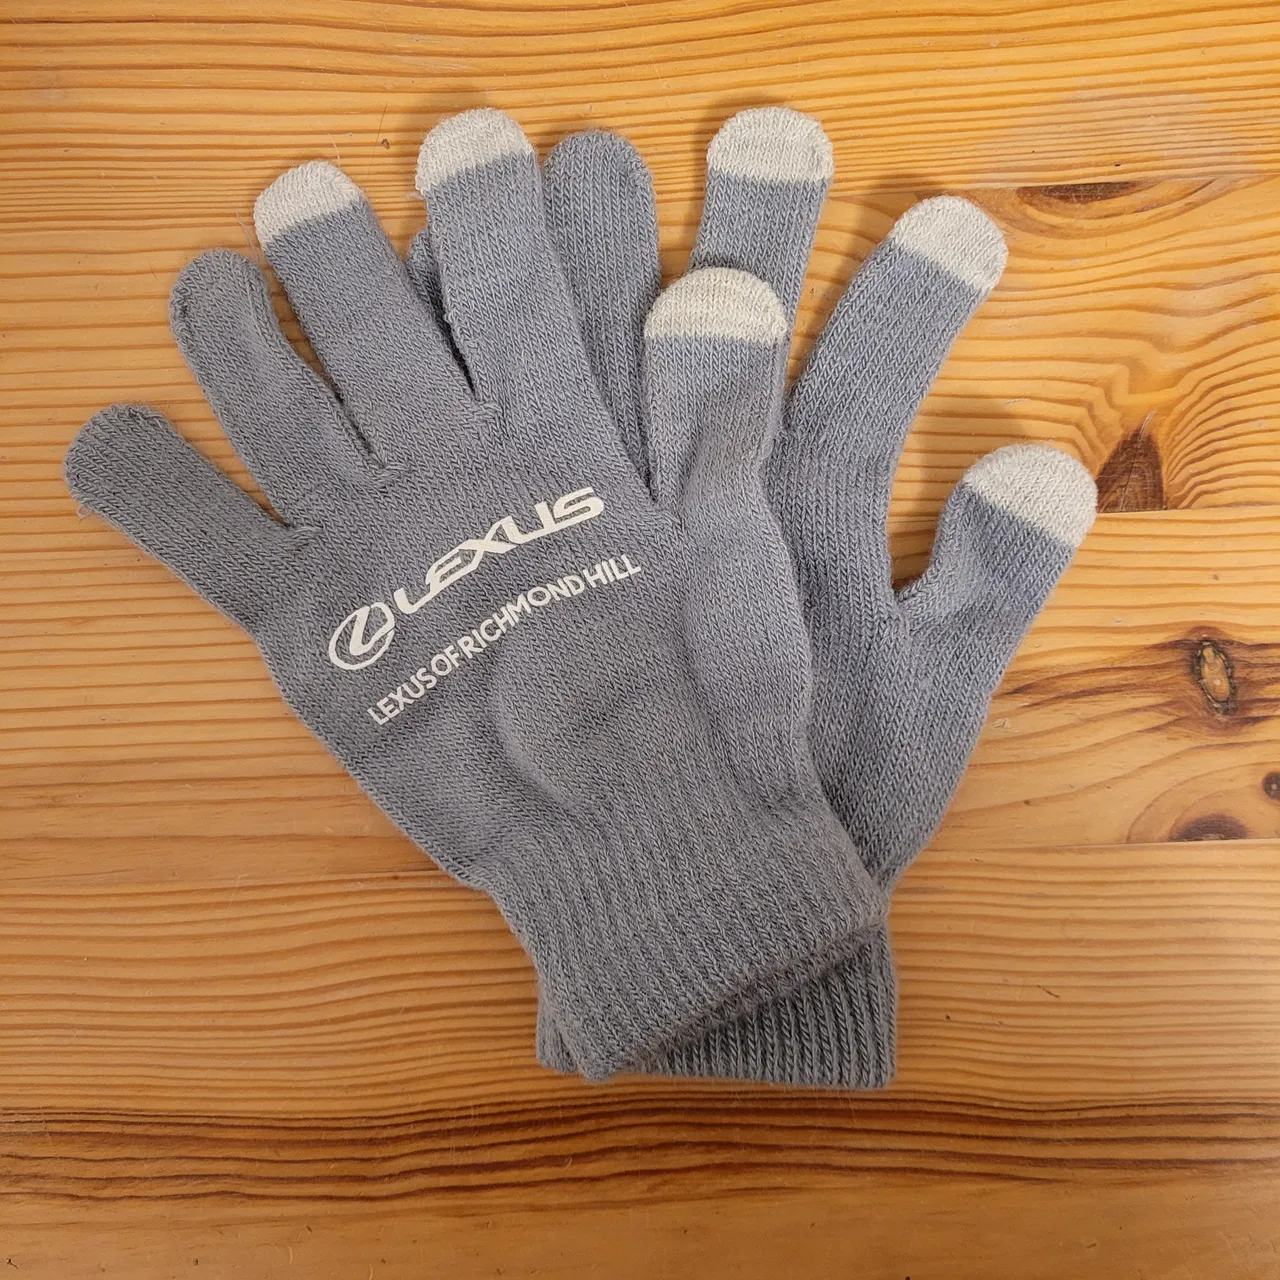 Free gloves photo 1